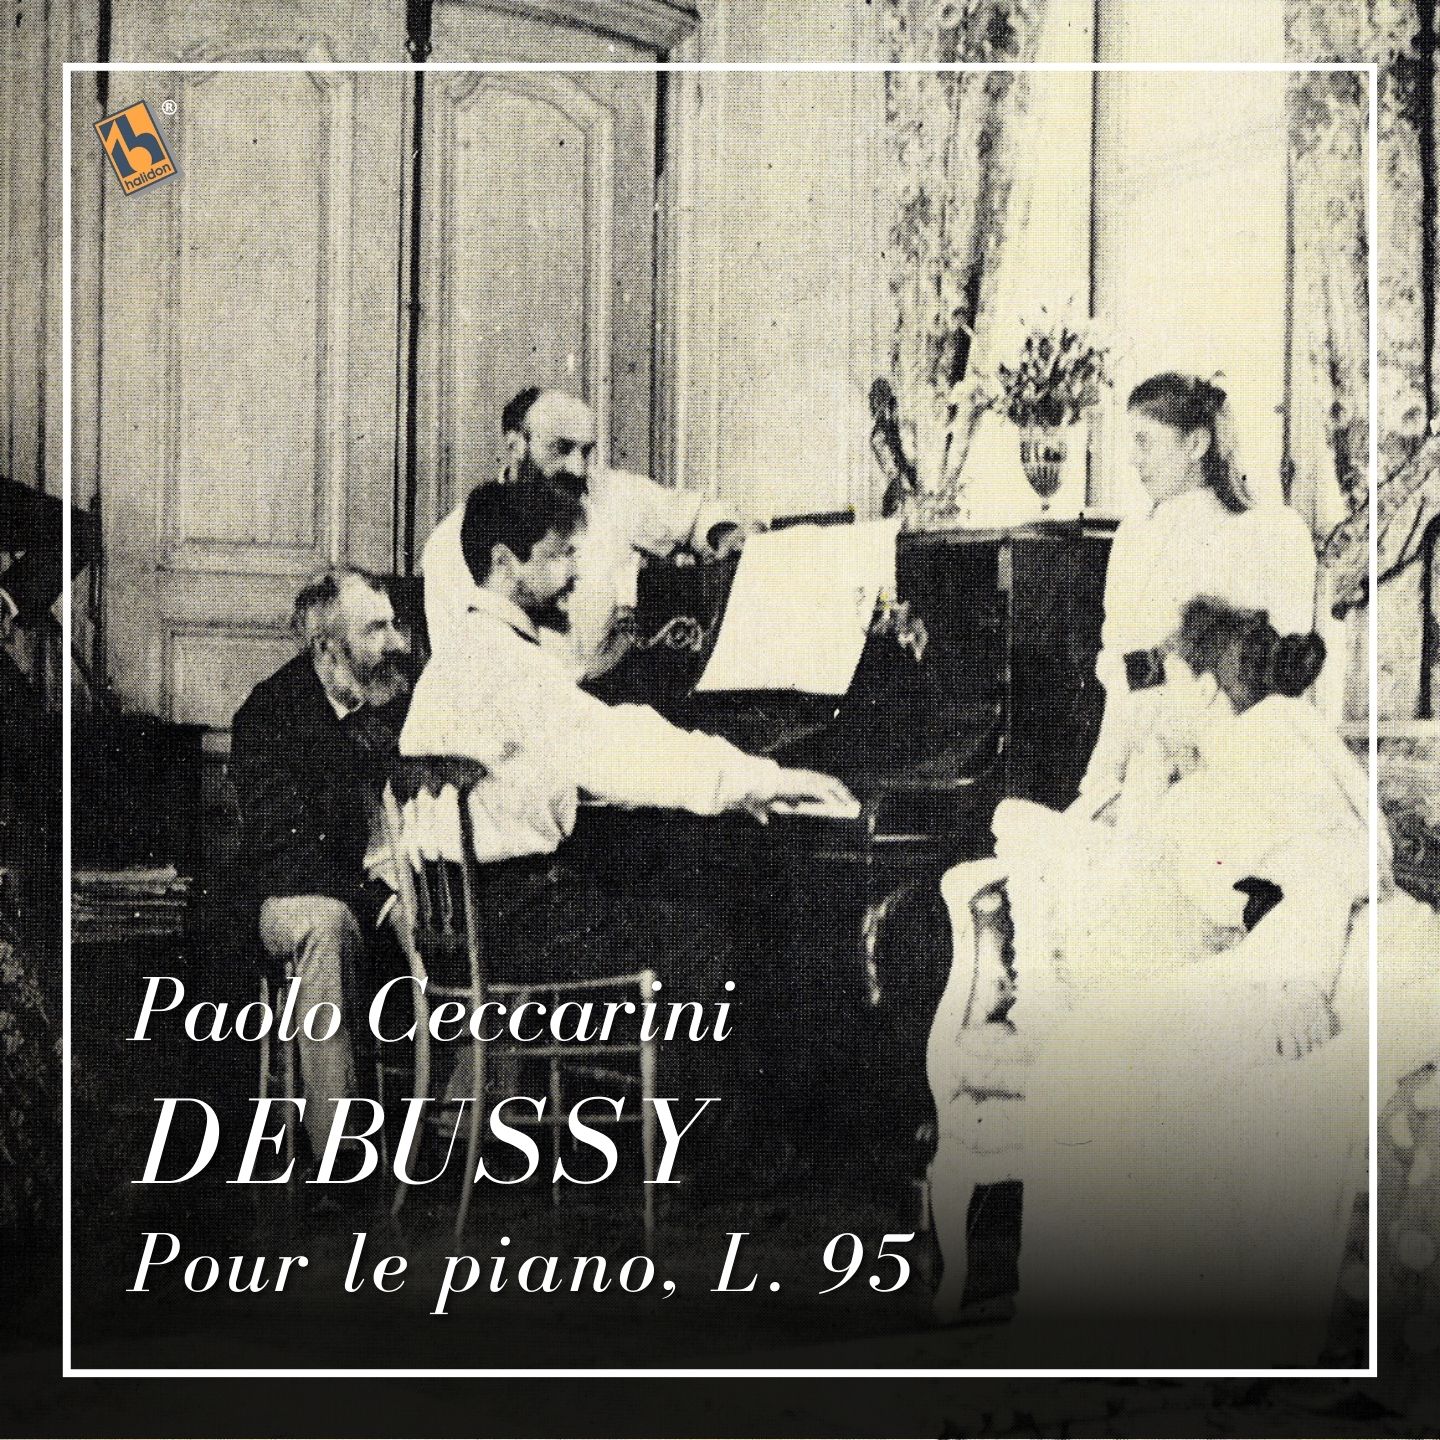 Debussy: Pour le piano, L. 95